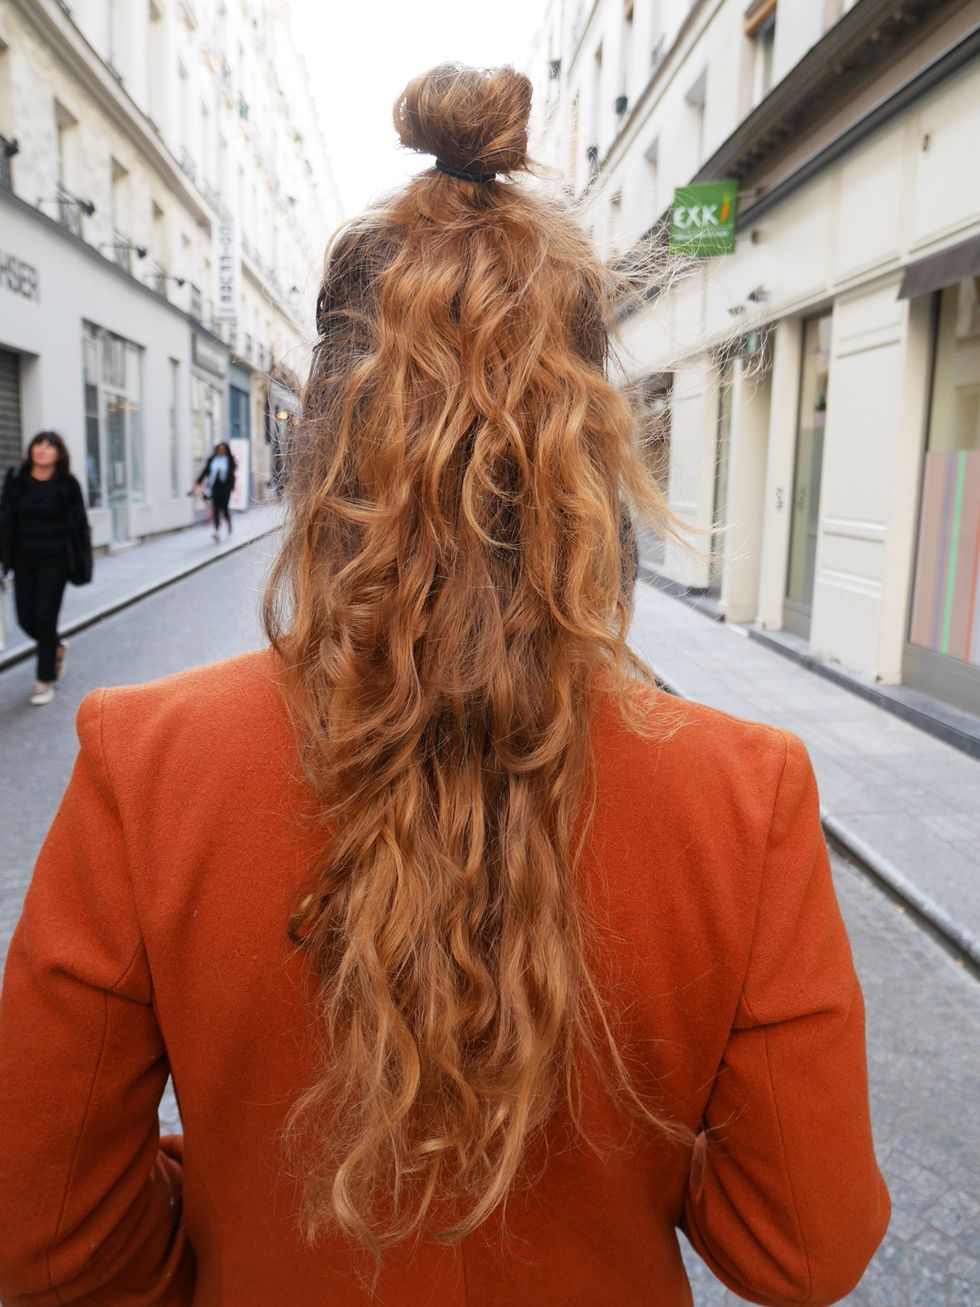 Hairstyle, Sleeve, Shoulder, Back, Street, Street fashion, Orange, Long hair, Brown hair, Pedestrian, 